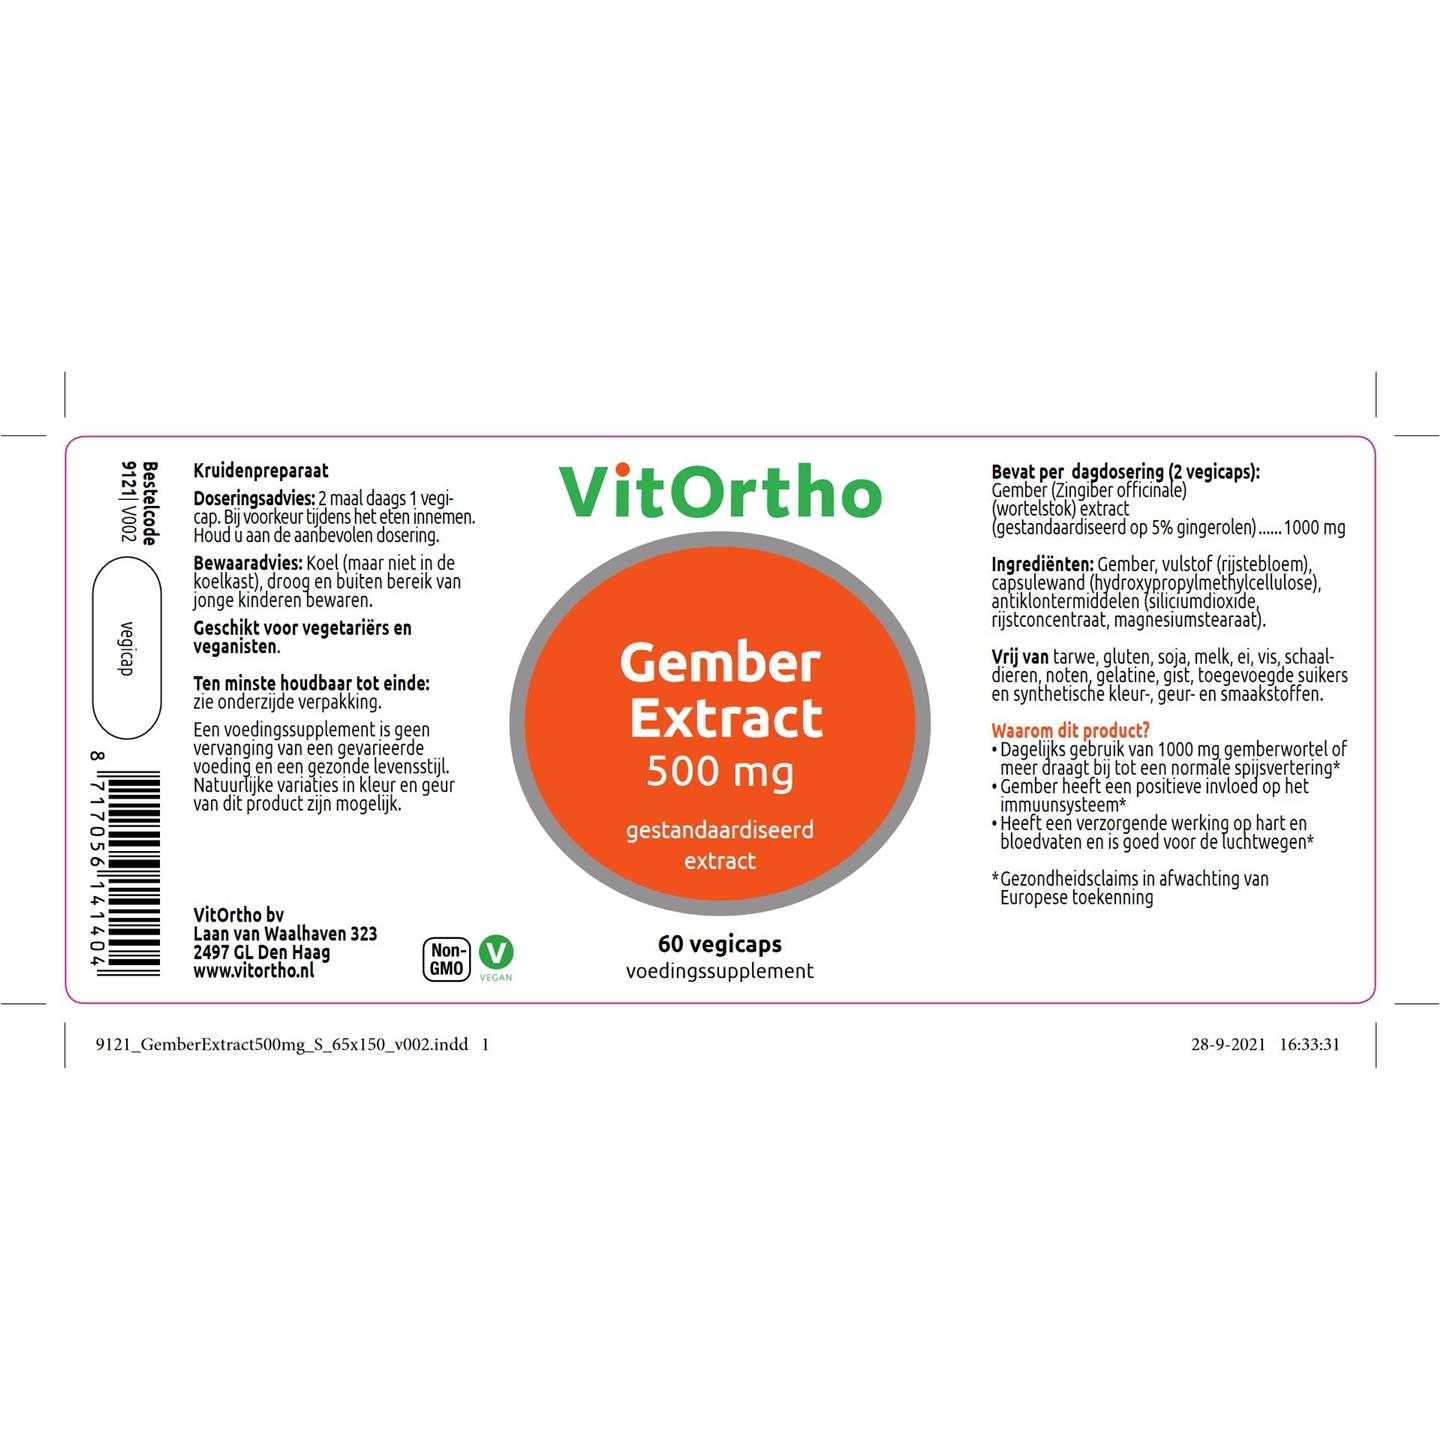 etiquette straf achterstalligheid Gember extract 500 mg (VitOrtho)